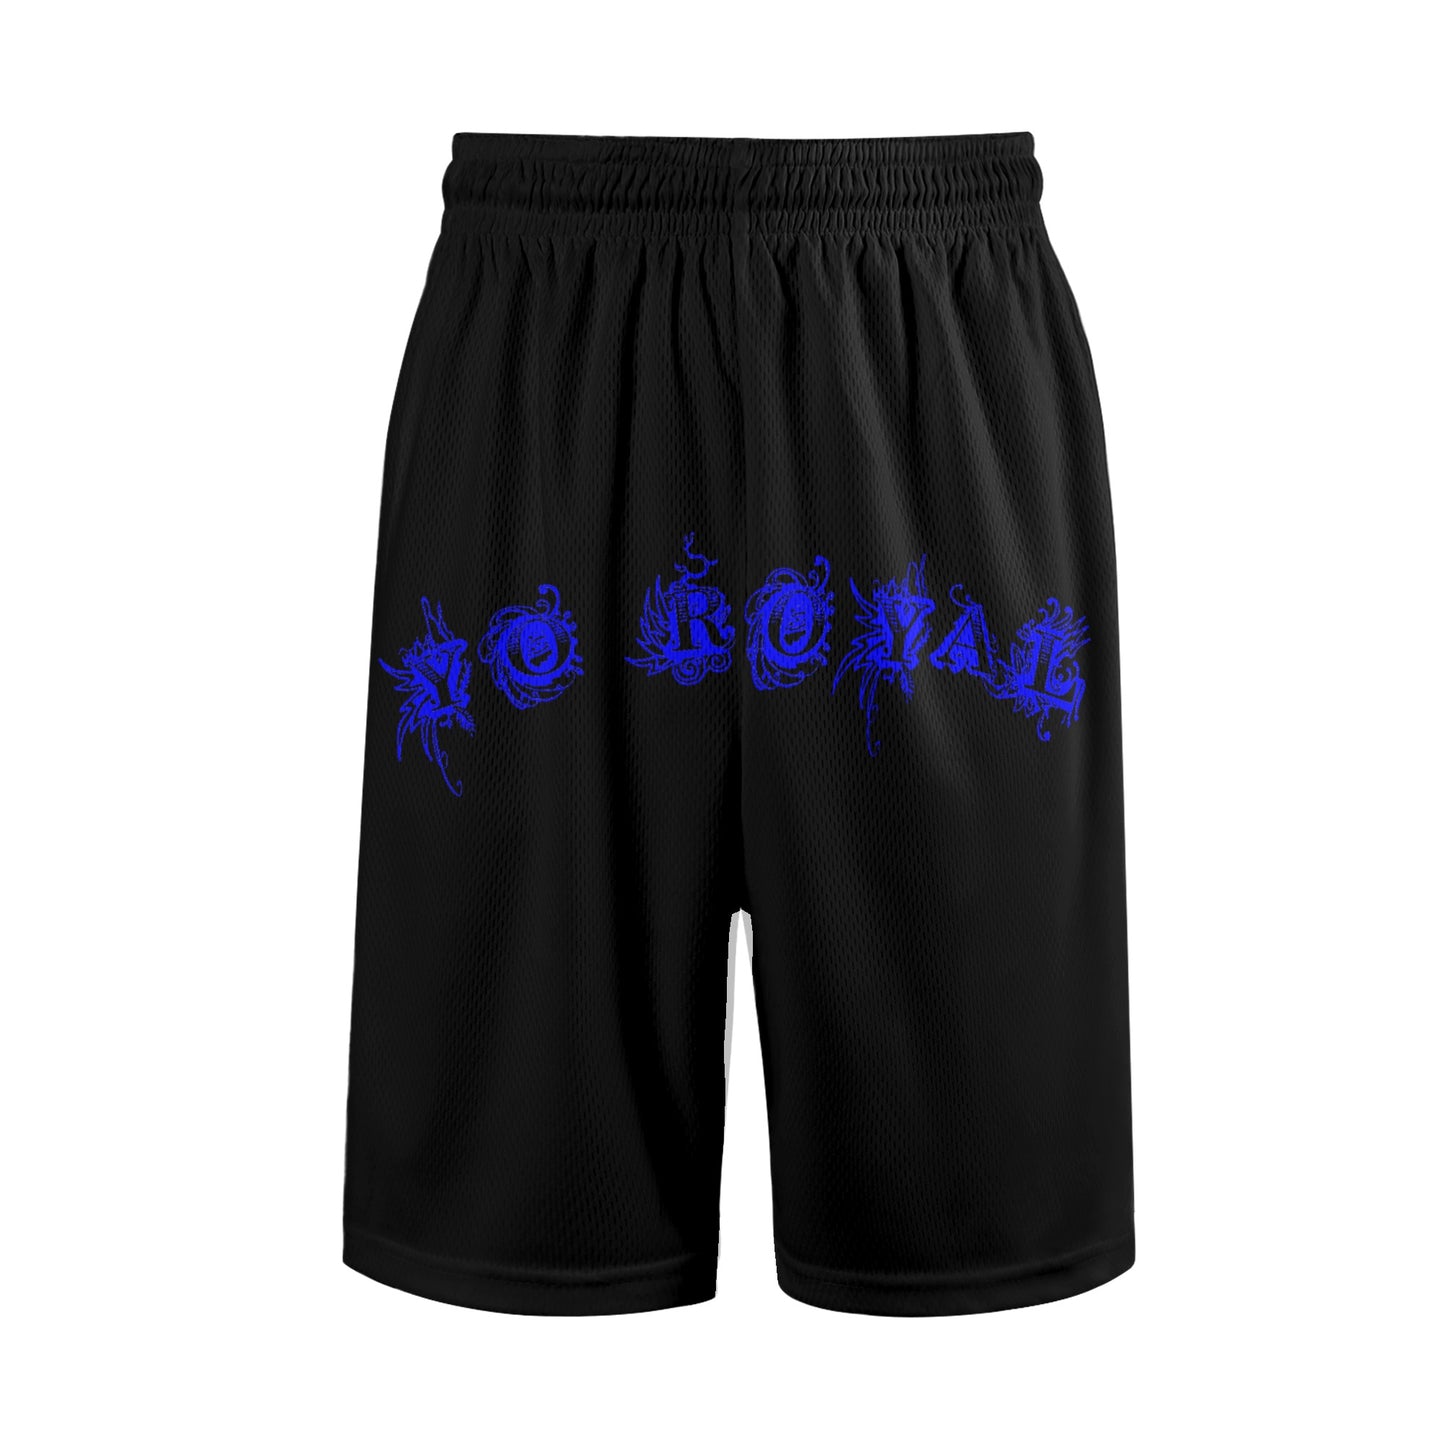 Yo Royal Basketball Shorts